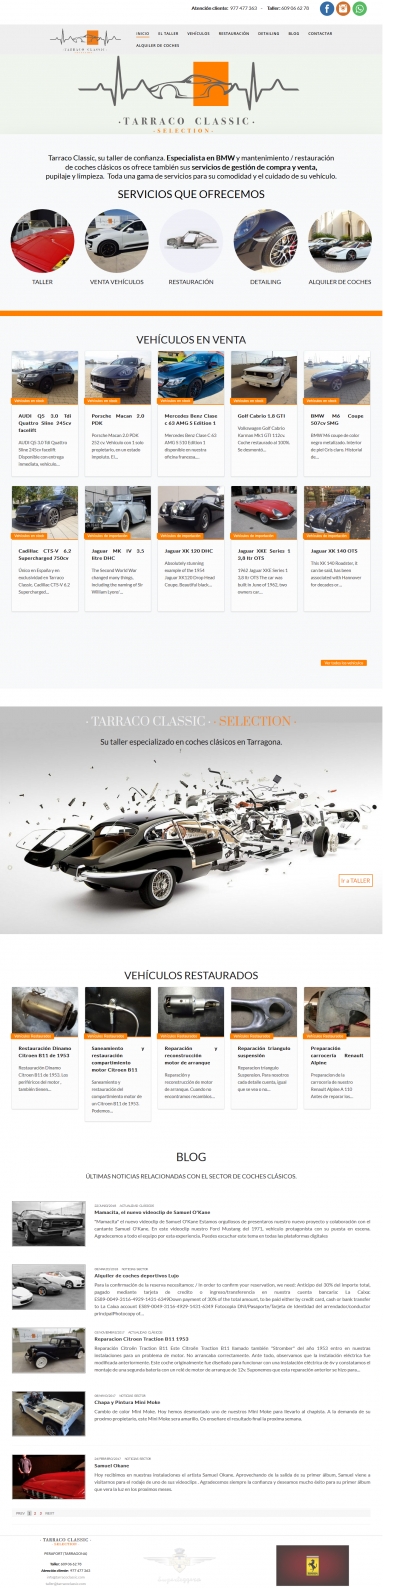 Diseño de página web para taller de coches clásicos